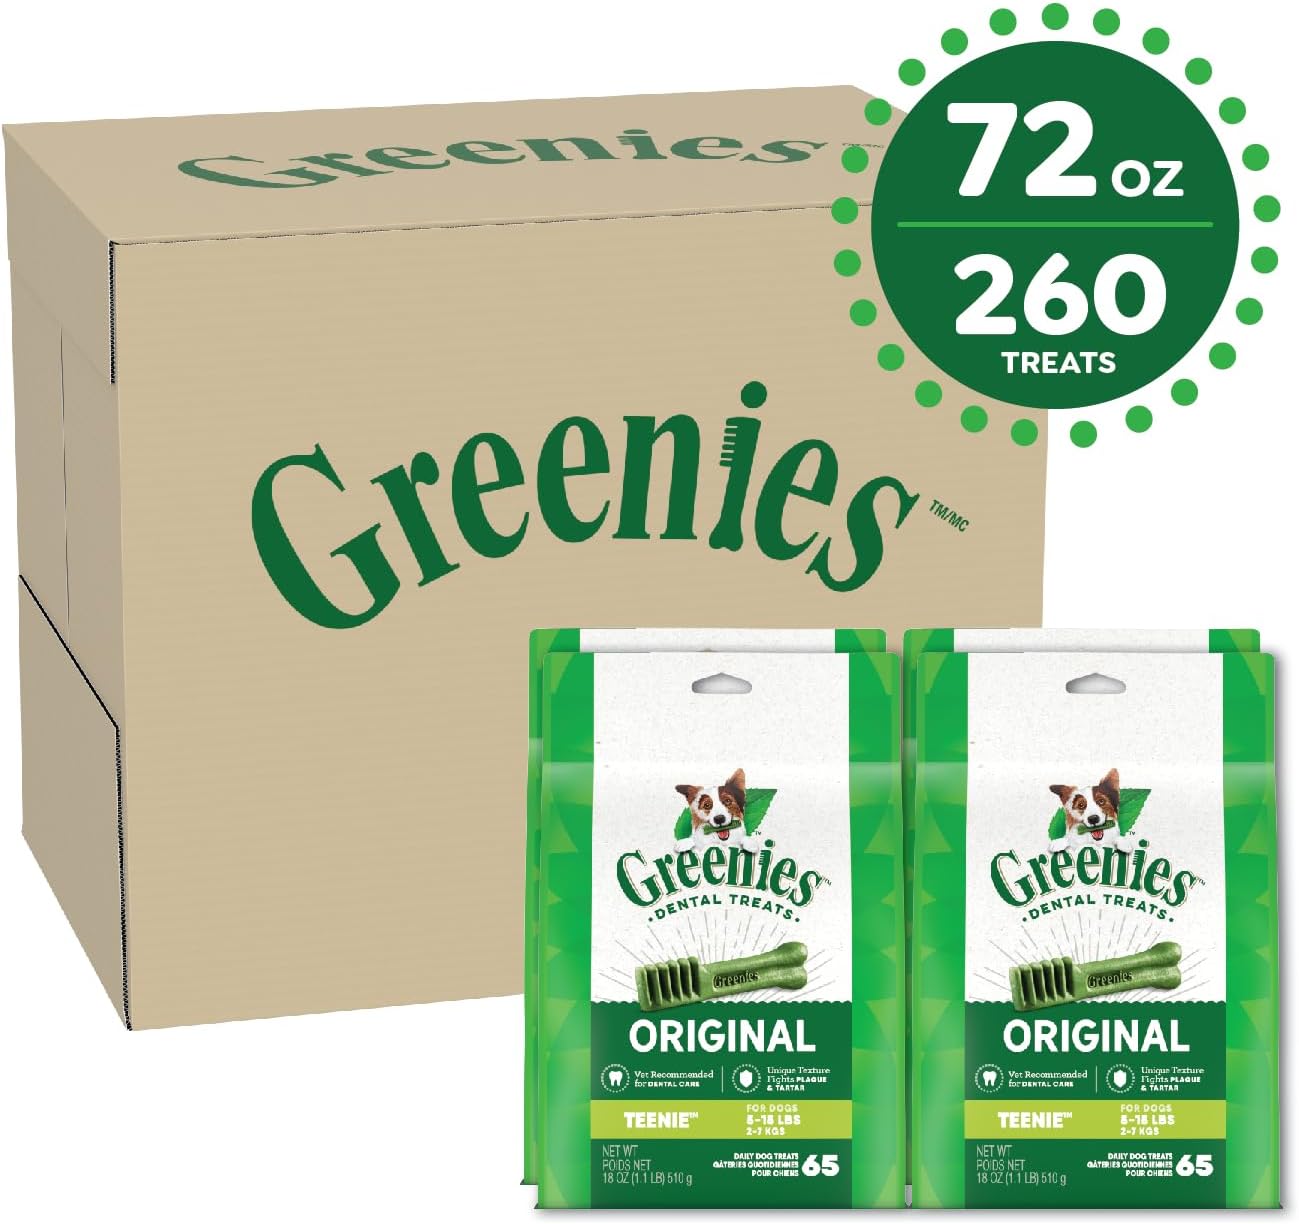 Greenies Original Teenie Natural Dental Care Dog Treats, 72 oz. Pack (260 Treats)